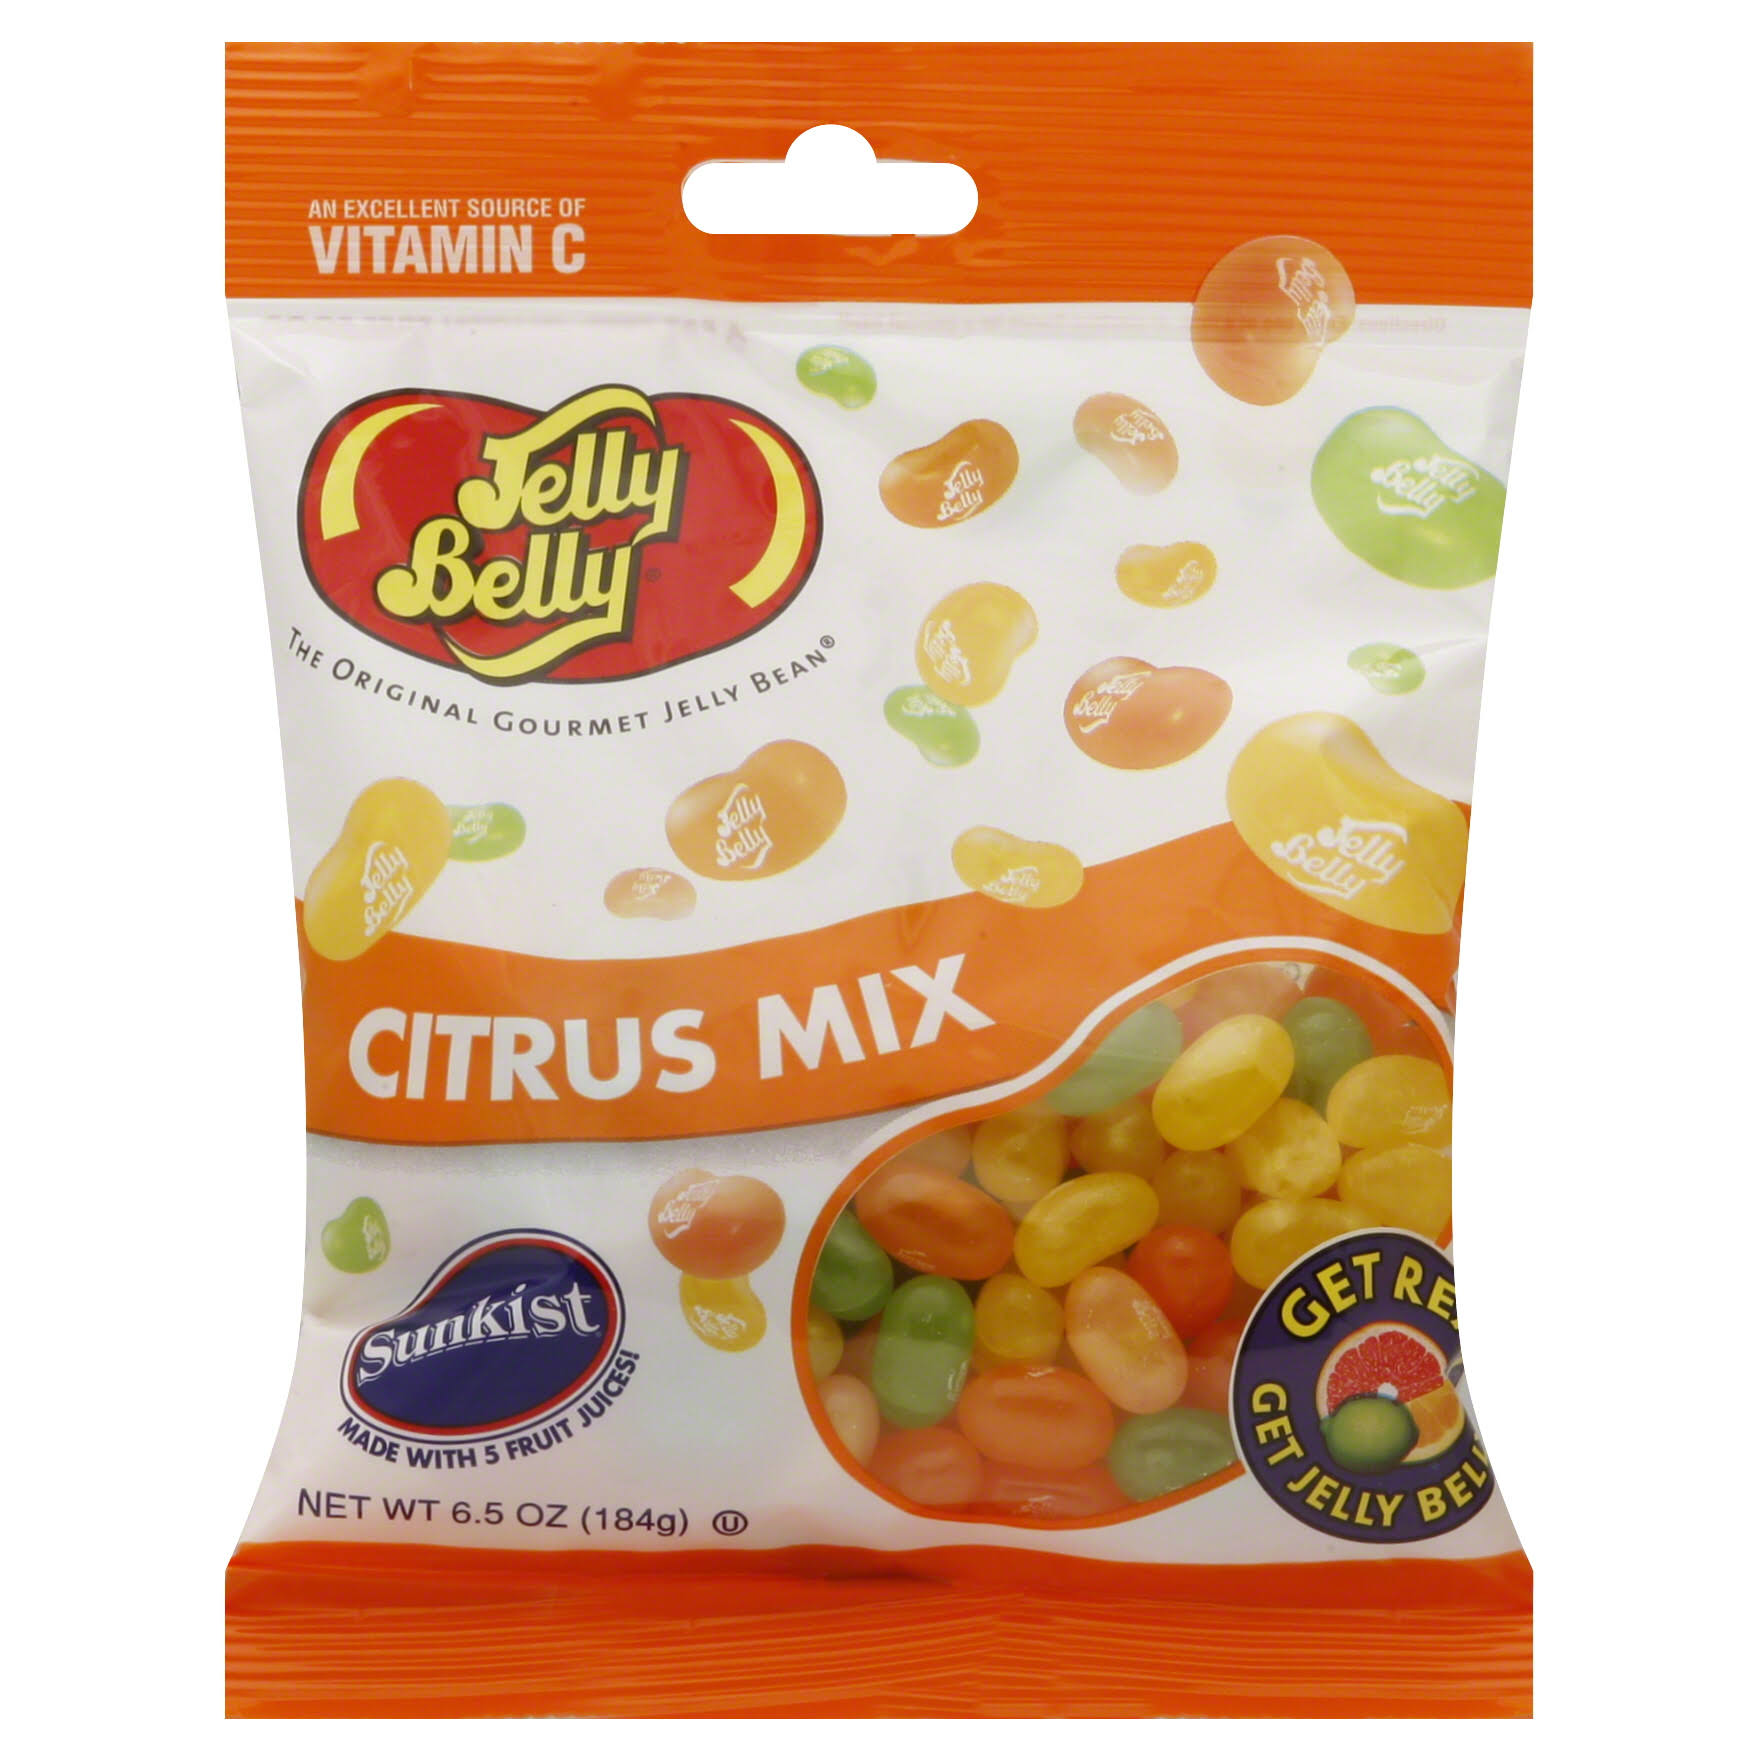 Jelly Belly Gourmet Jelly Bean - Sunkist Citrus Mix, 6.5oz